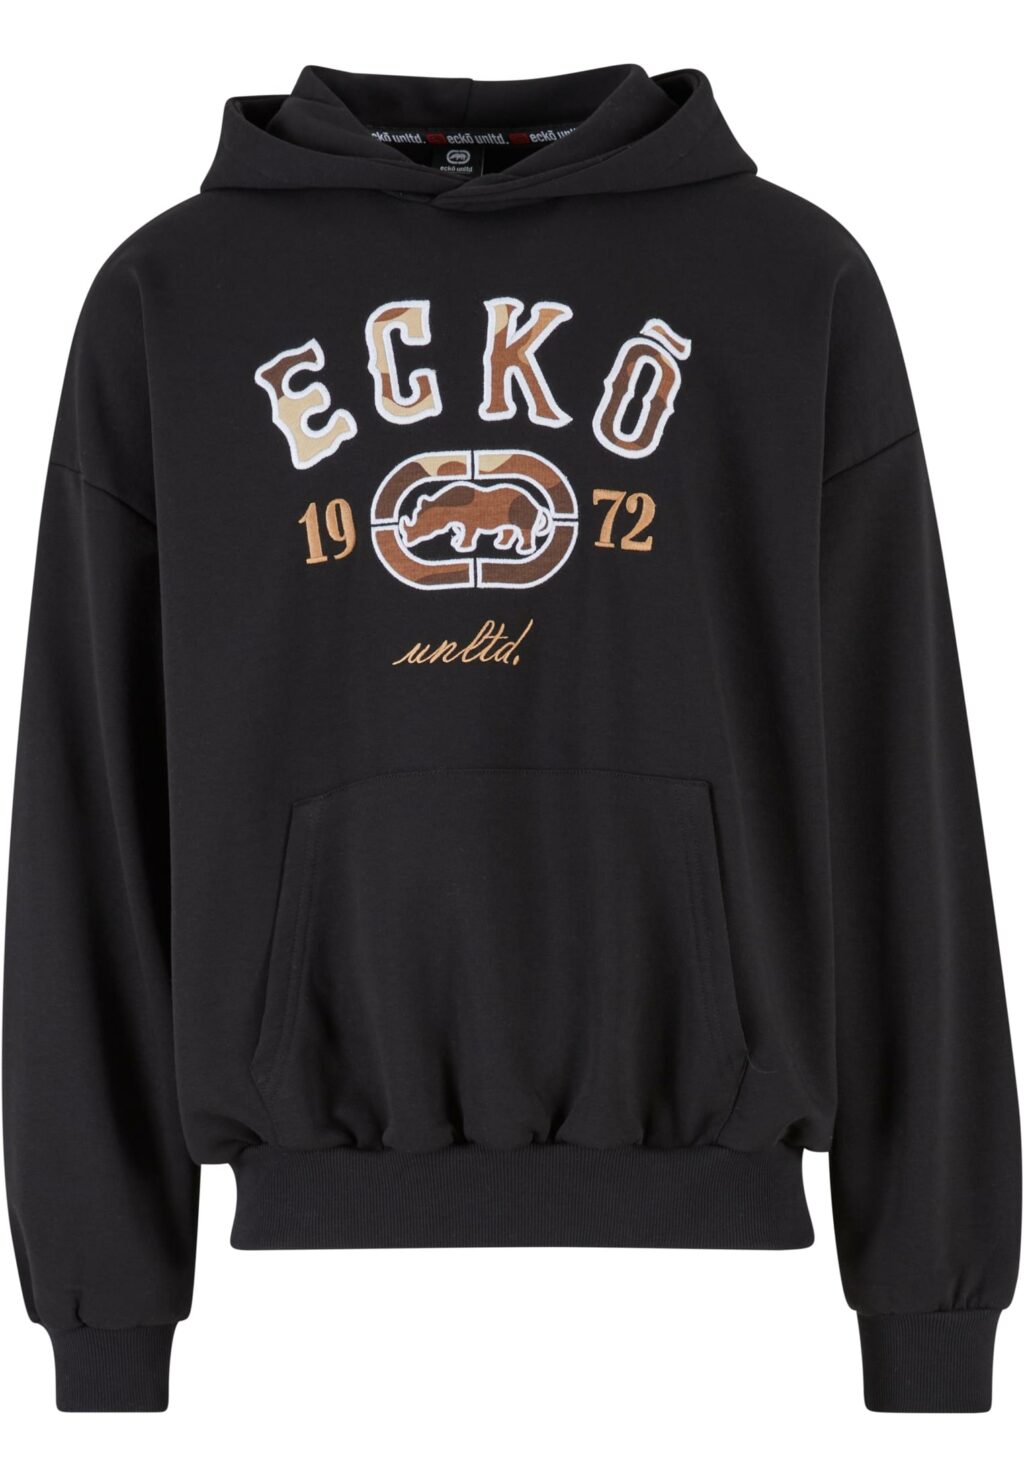 Ecko Unltd. Hoody black ECKOHD1116